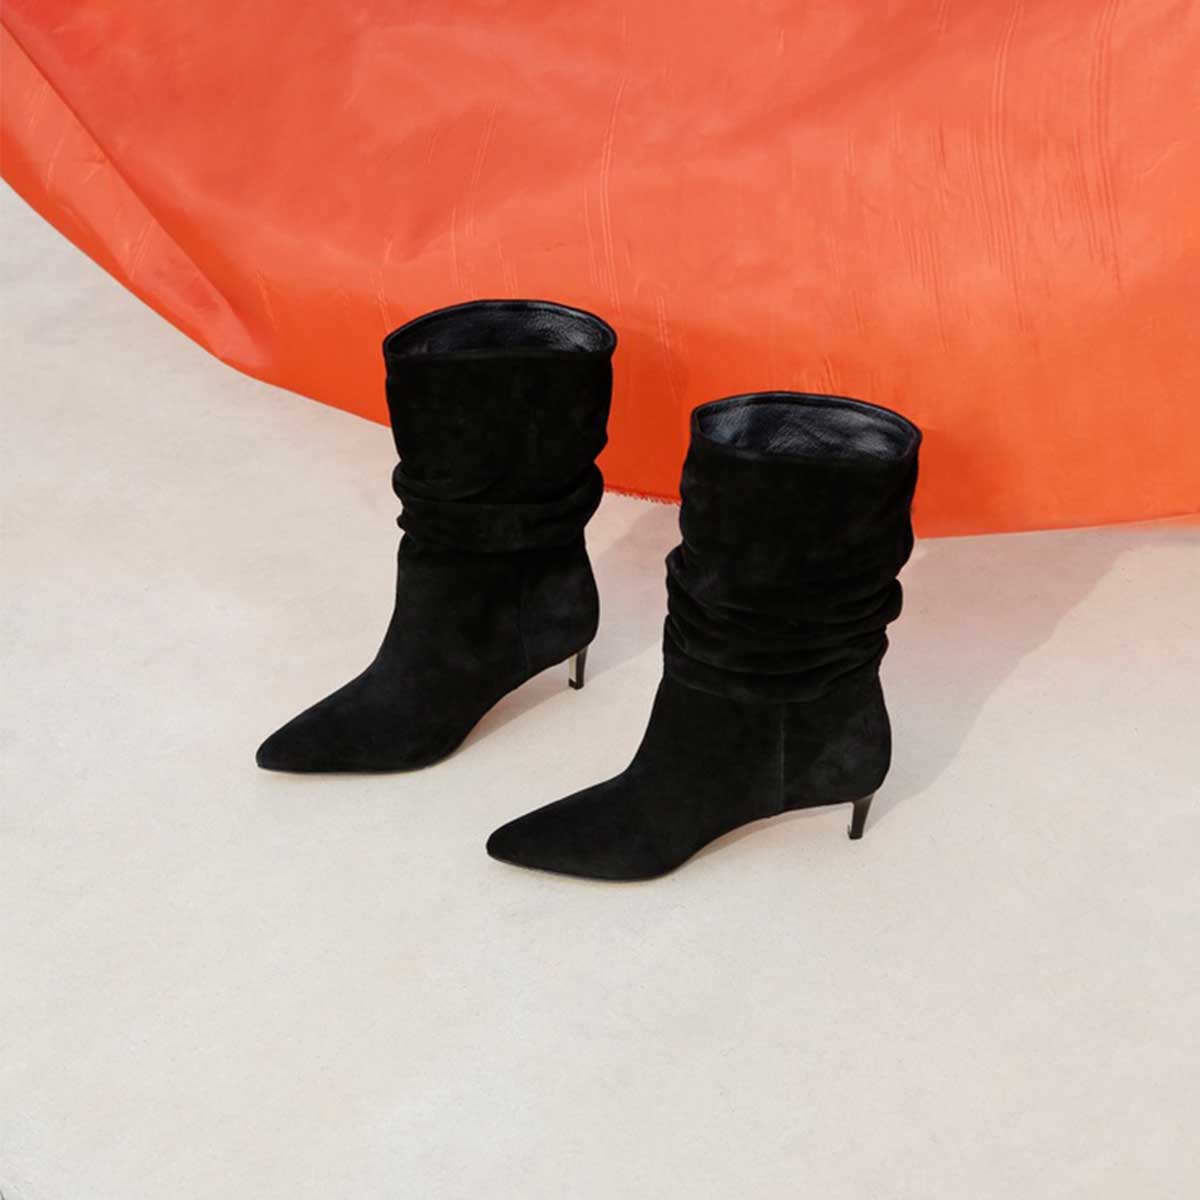 Occam Shirring Boots (오캄 셔링 부츠) Black